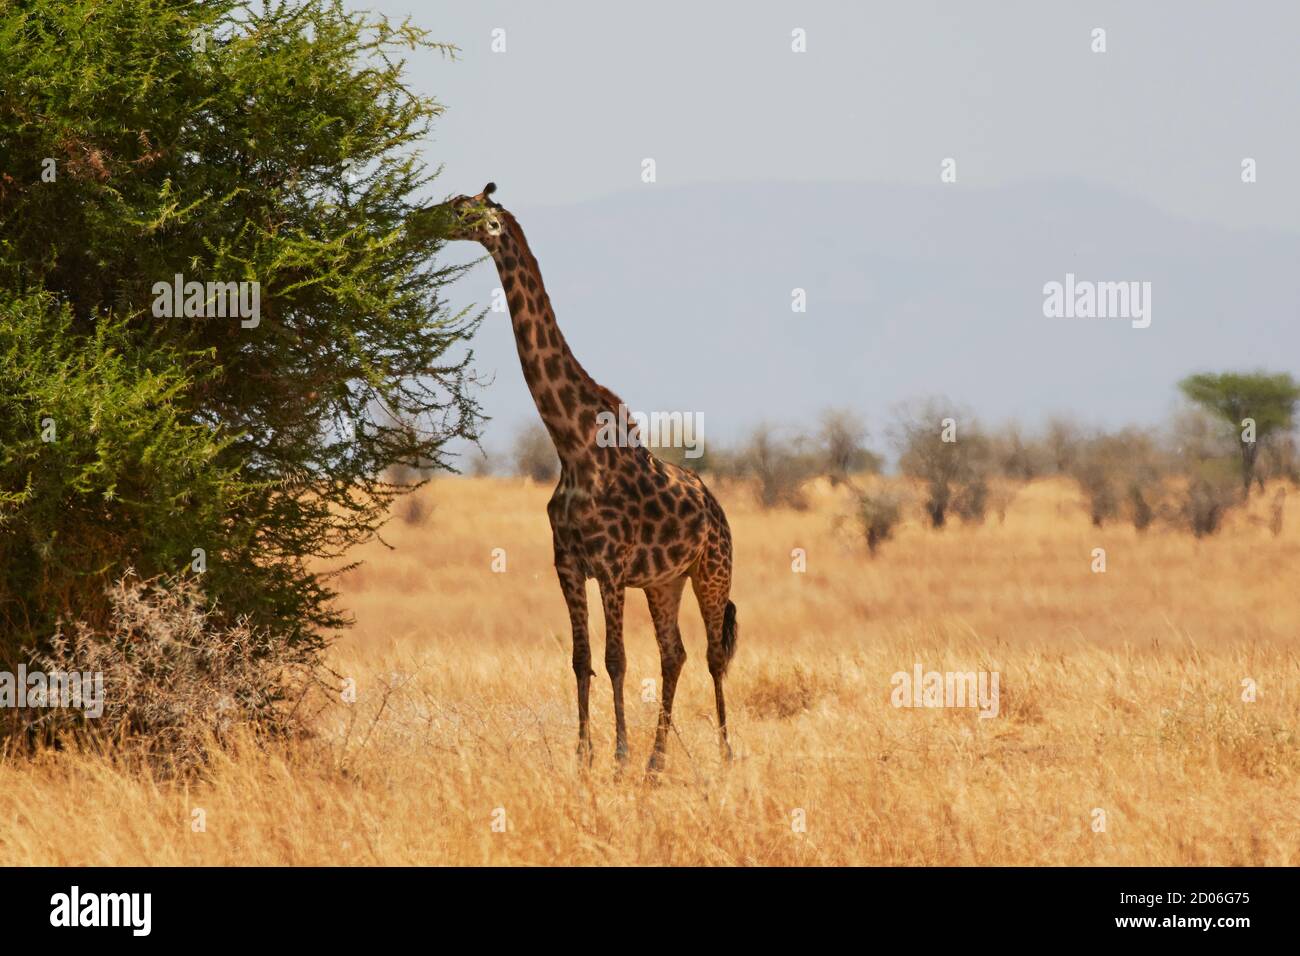 A Masai Giraffe eating from a tree inside the Serengeti National Park, Tanzania, Africa. Stock Photo